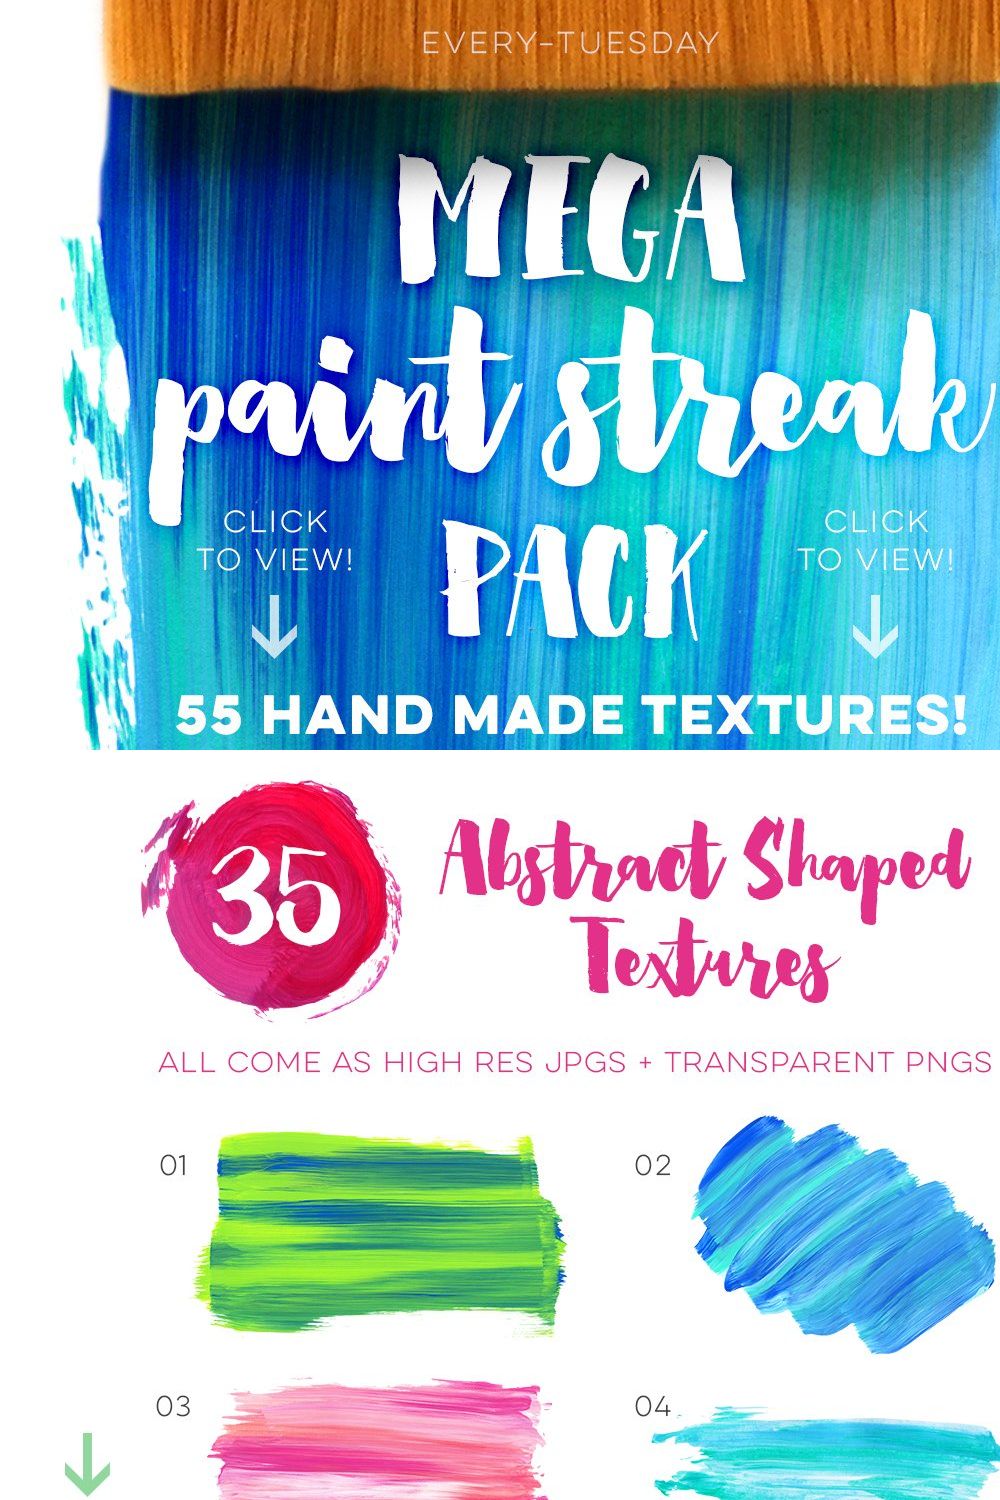 Mega Paint Streak Pack pinterest preview image.